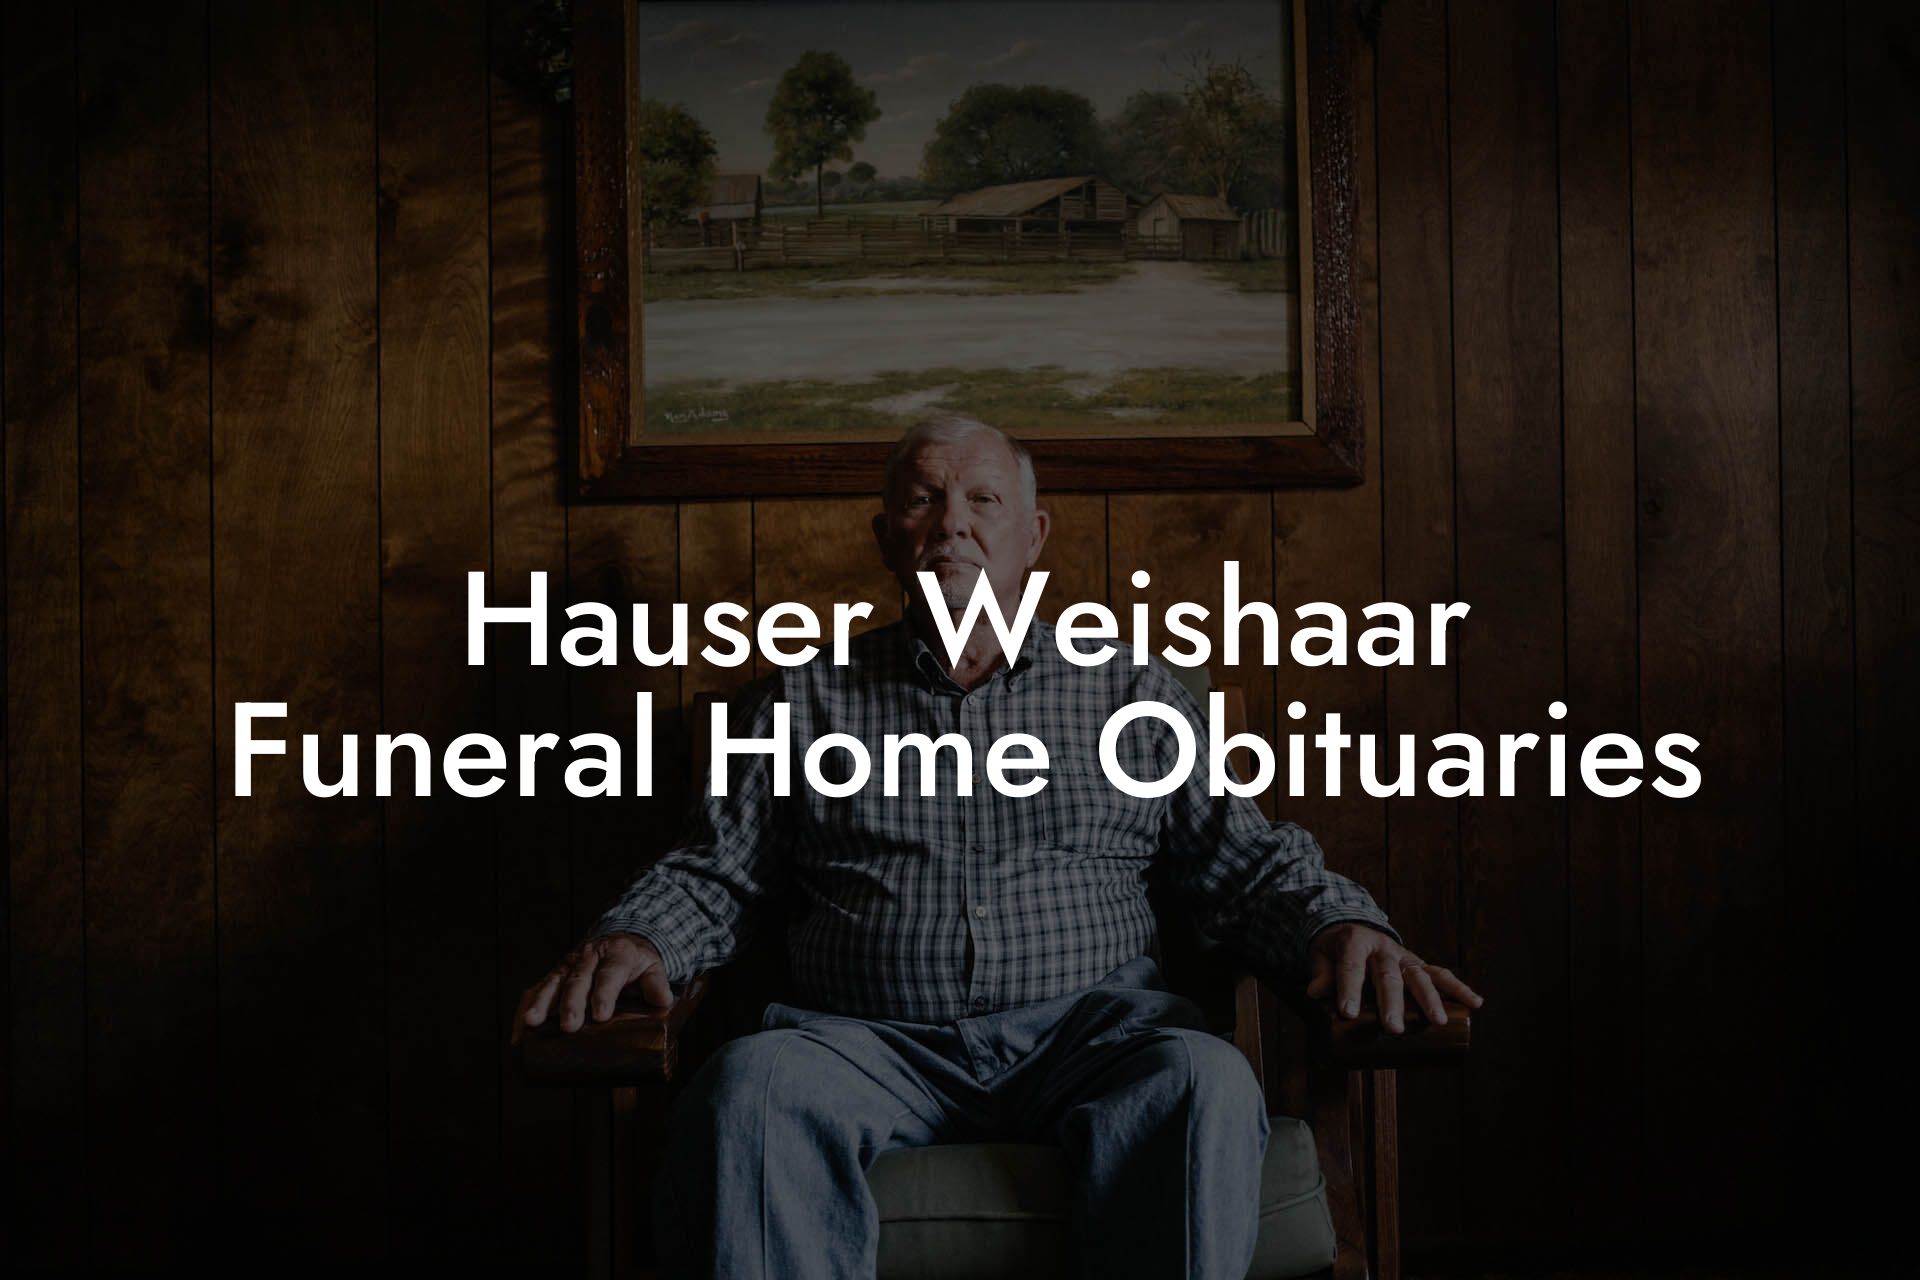 Hauser Weishaar Funeral Home Obituaries